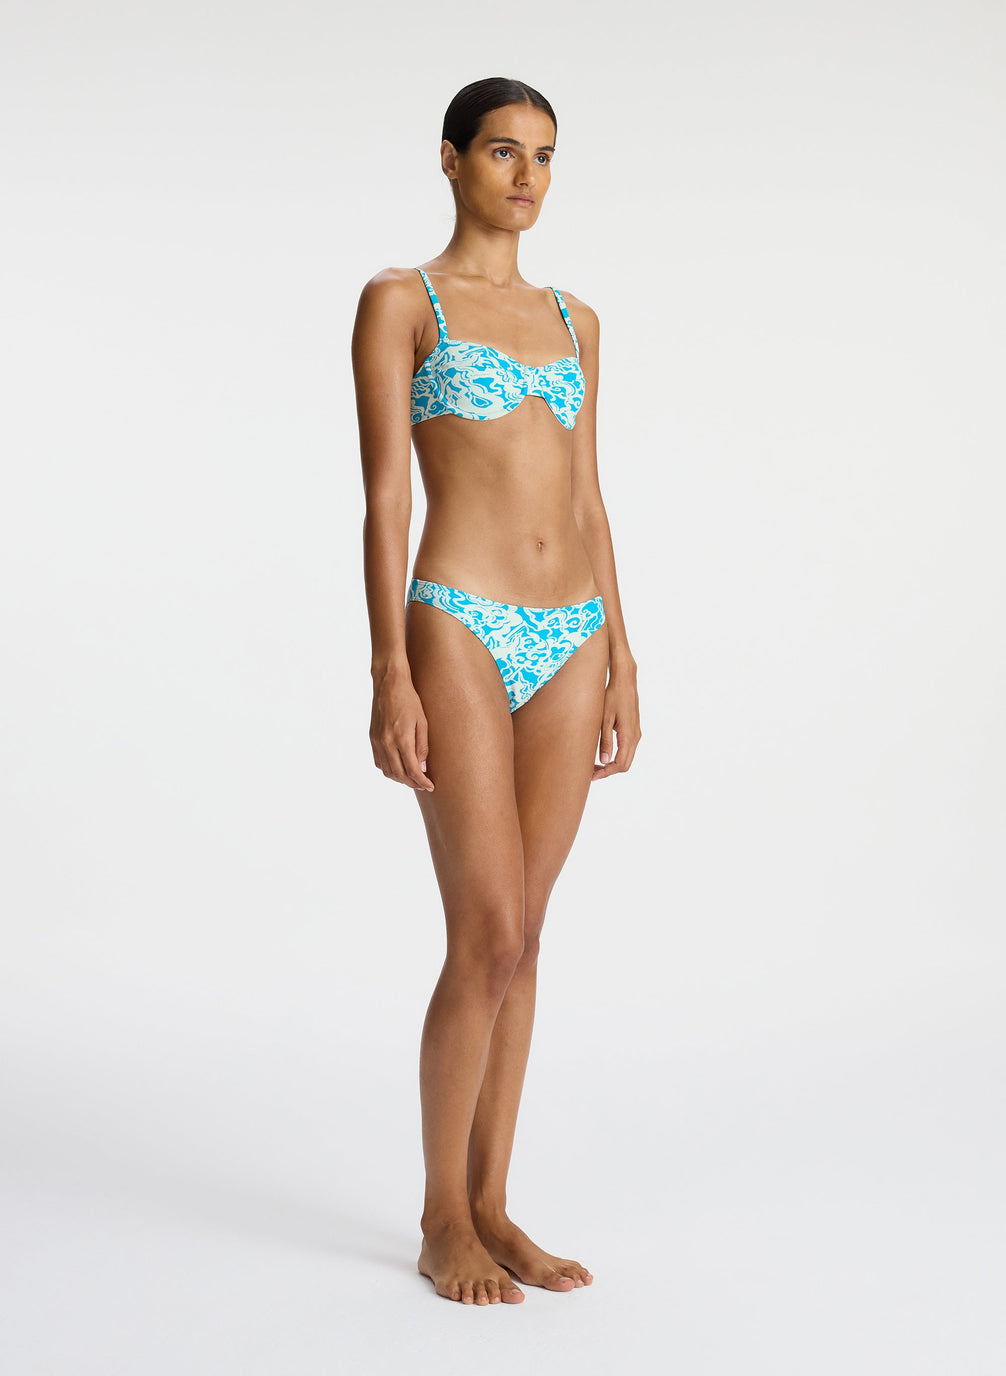 side view of woman wearing aqua printed bikini set